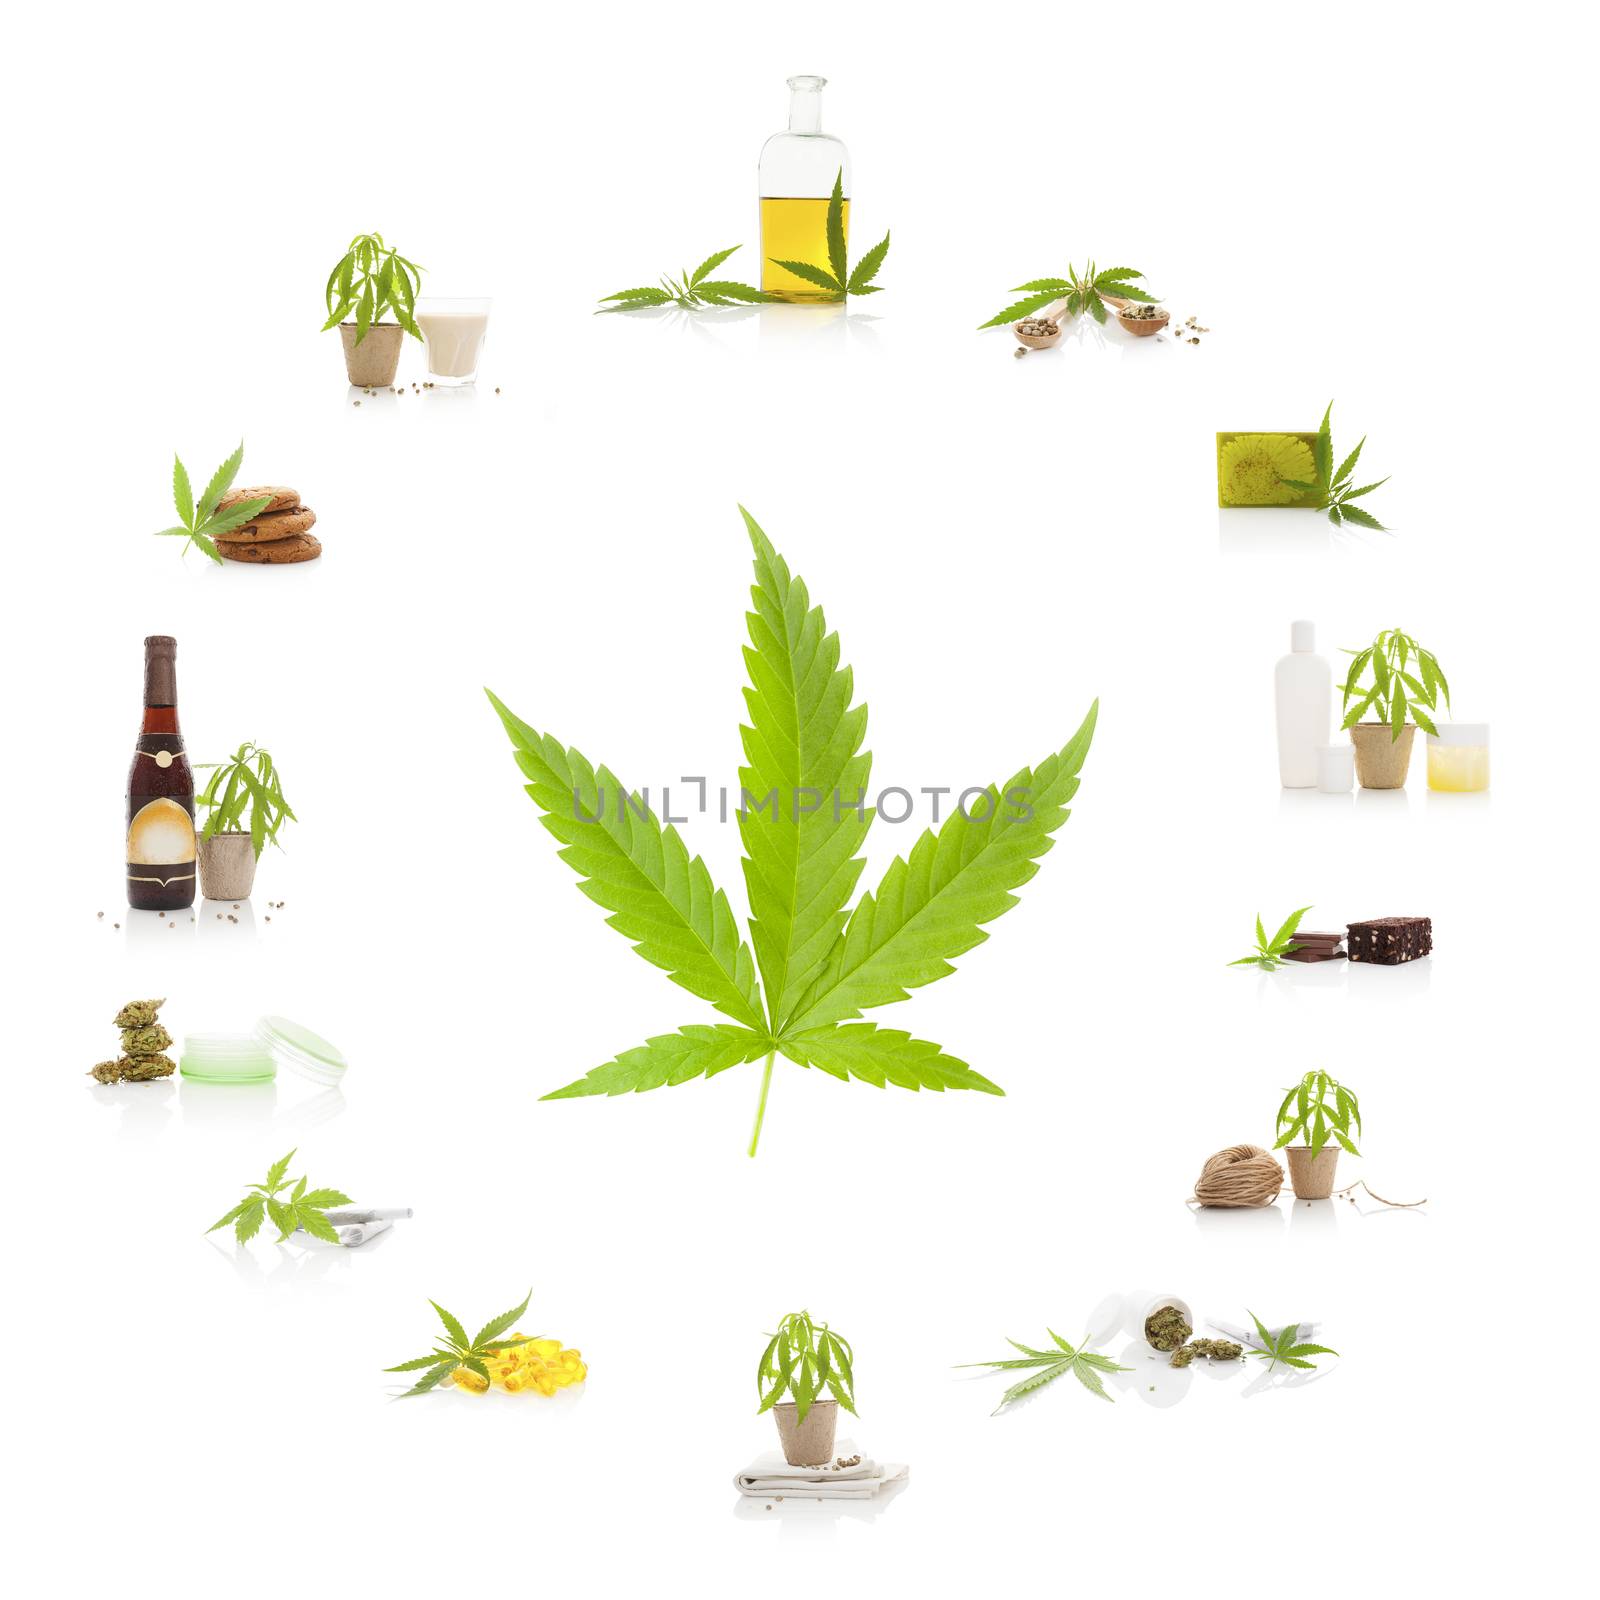 Cannabis. by eskymaks